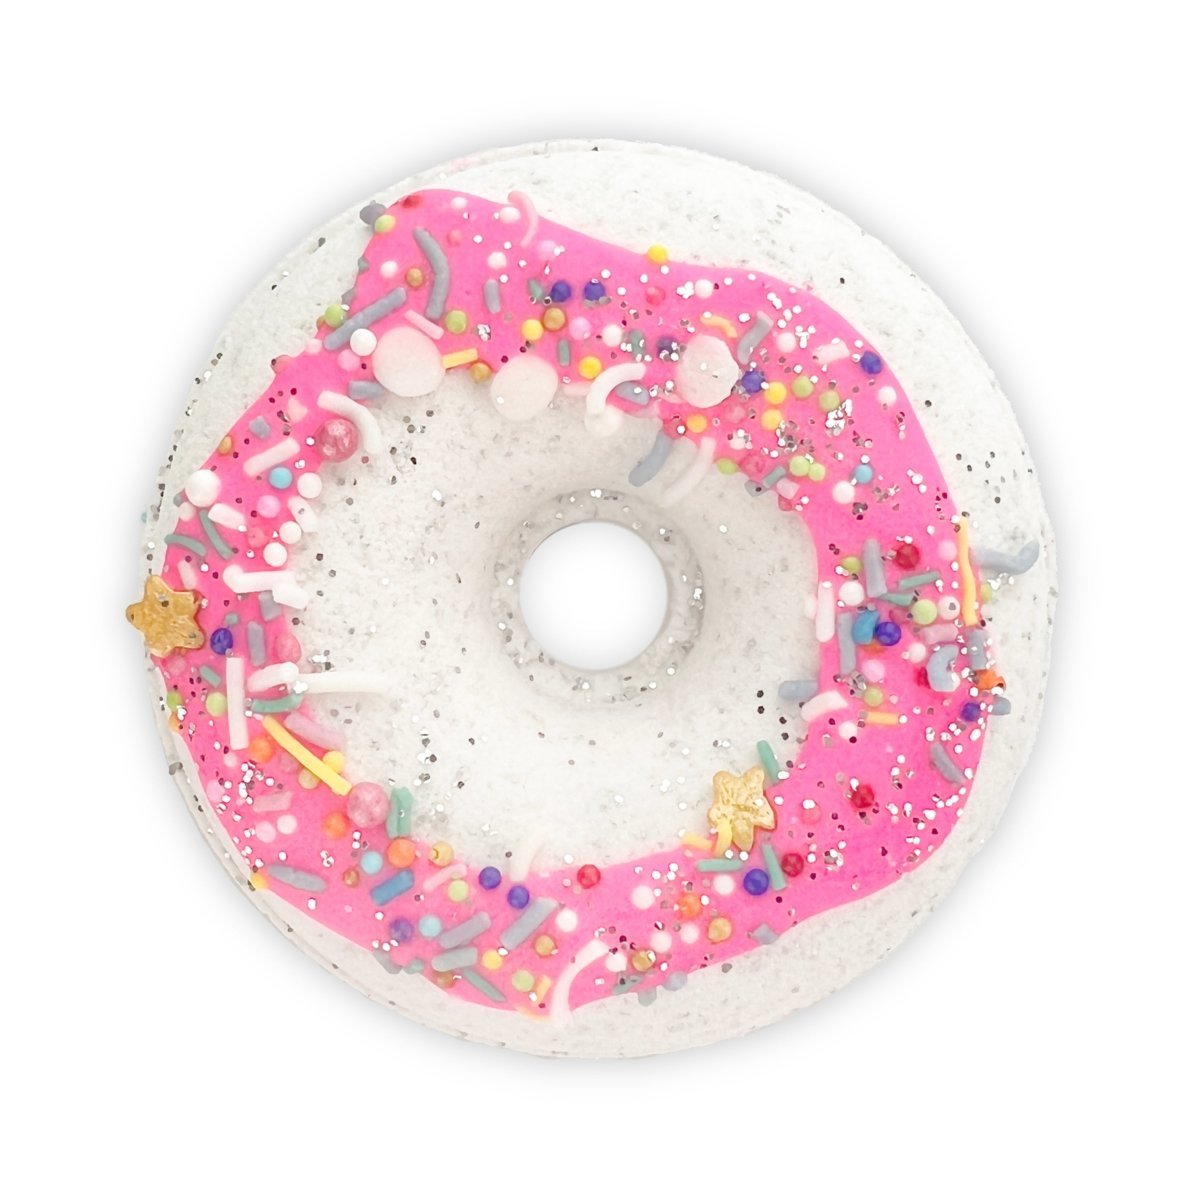 Jam Donut Bath Bomb for Kids & Adults - Colourful Sprinkles & Raspberry Jam Fragrance - Made in Australia by Bath Box